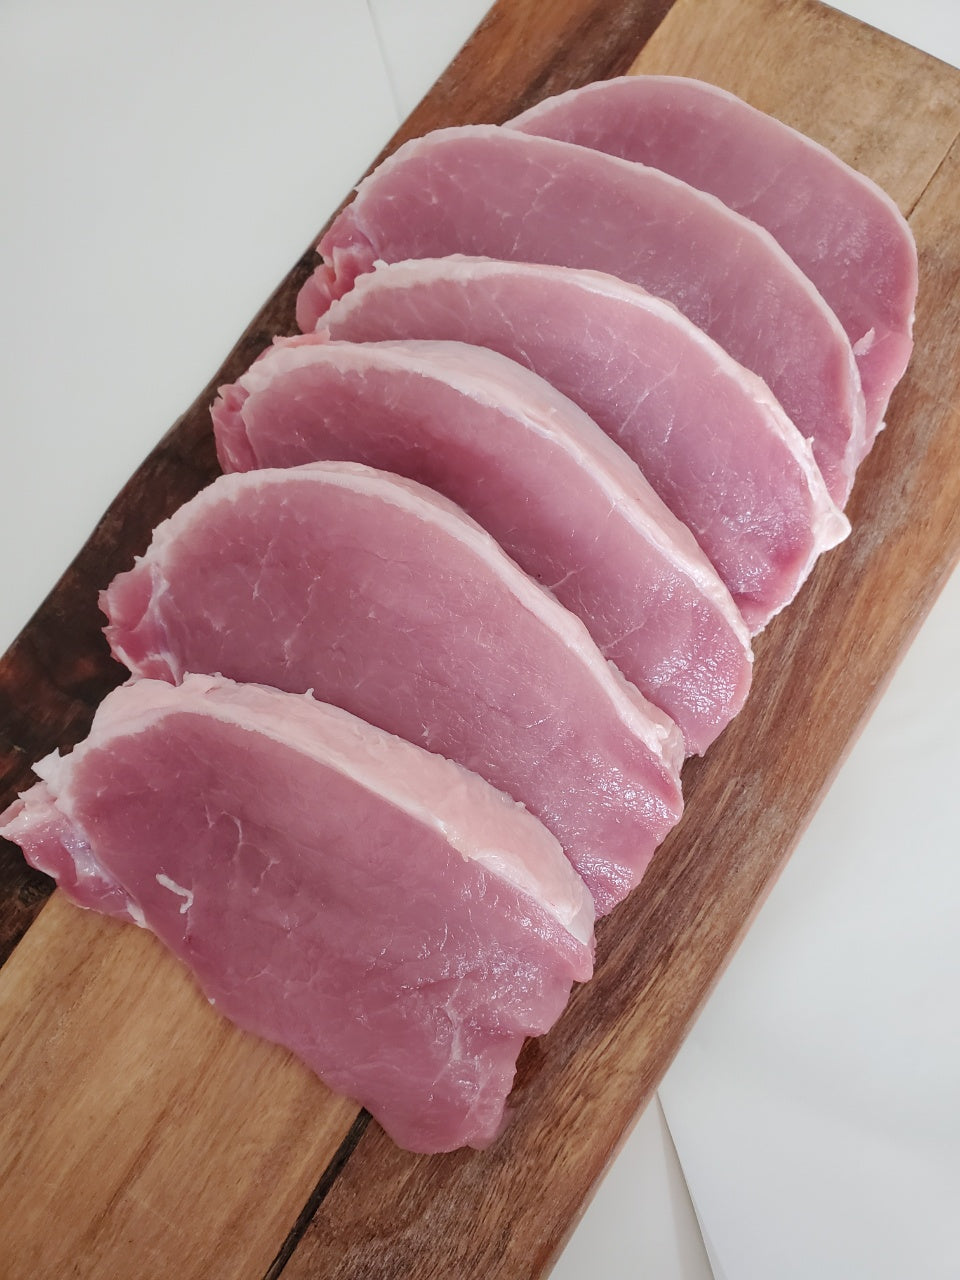 [Fresh] Pork Loin 돈까스용 생등심/Pk (5pcs)